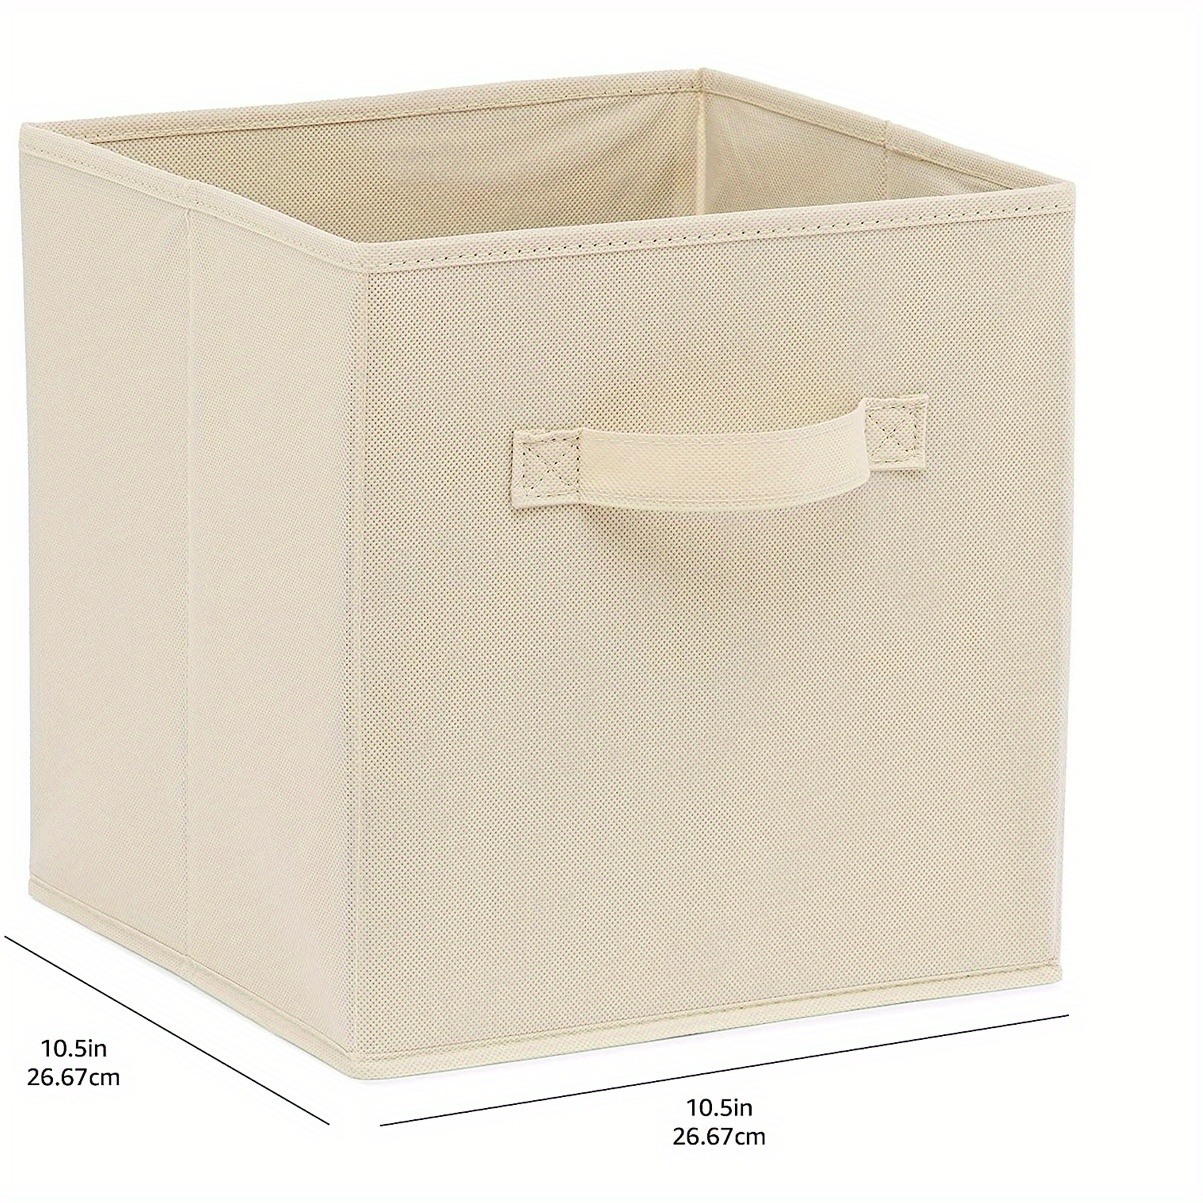 Woven Storage Box Cube Basket Bin Container Tote Organizer